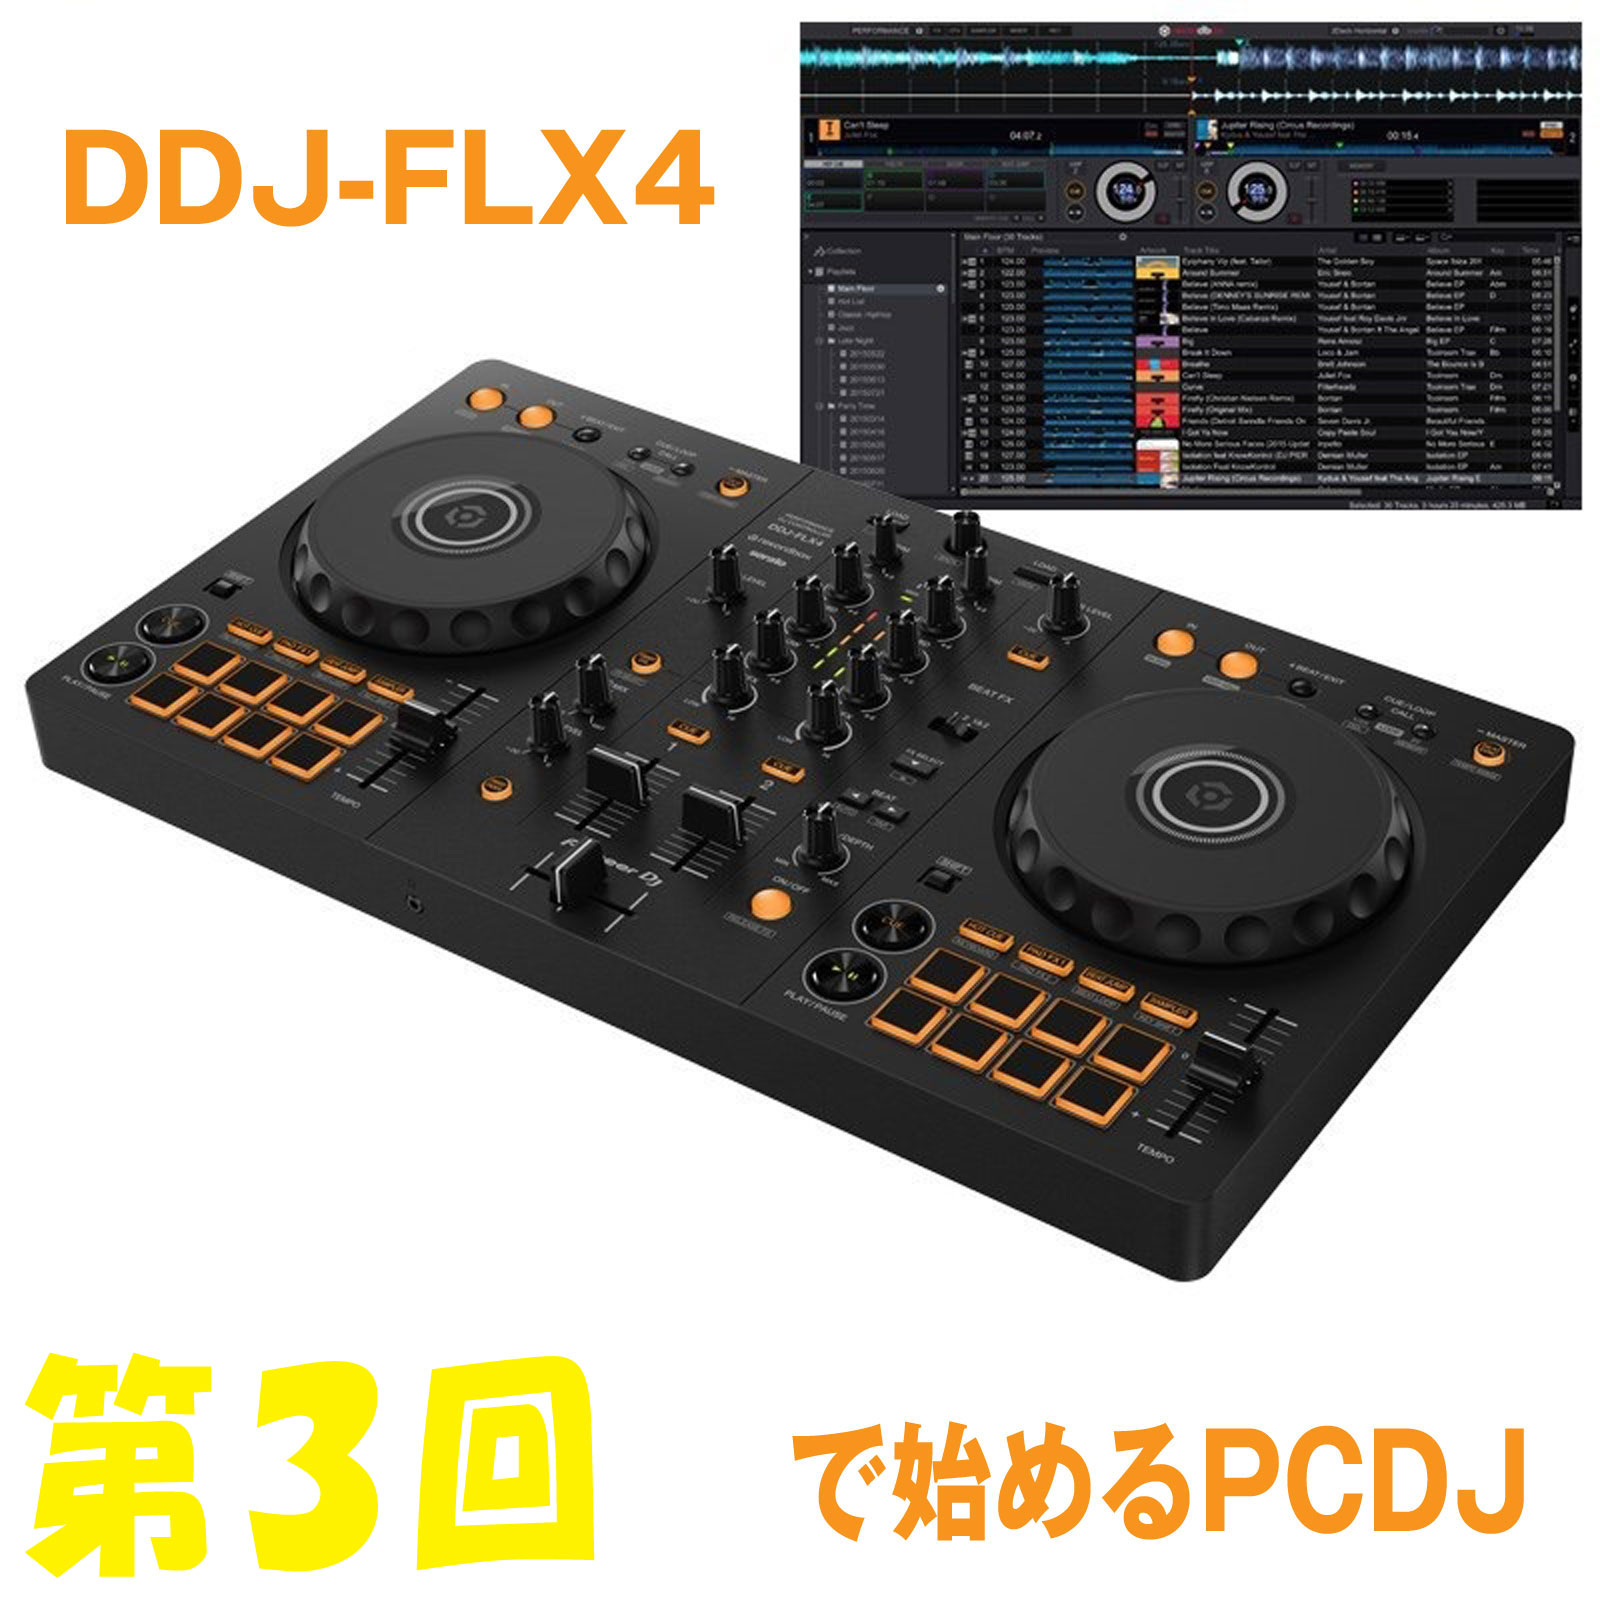 第3回】DDJ-FLX4で始めるPCDJ【DJ MIX編 前編】 | 池部楽器店 DJ機器 